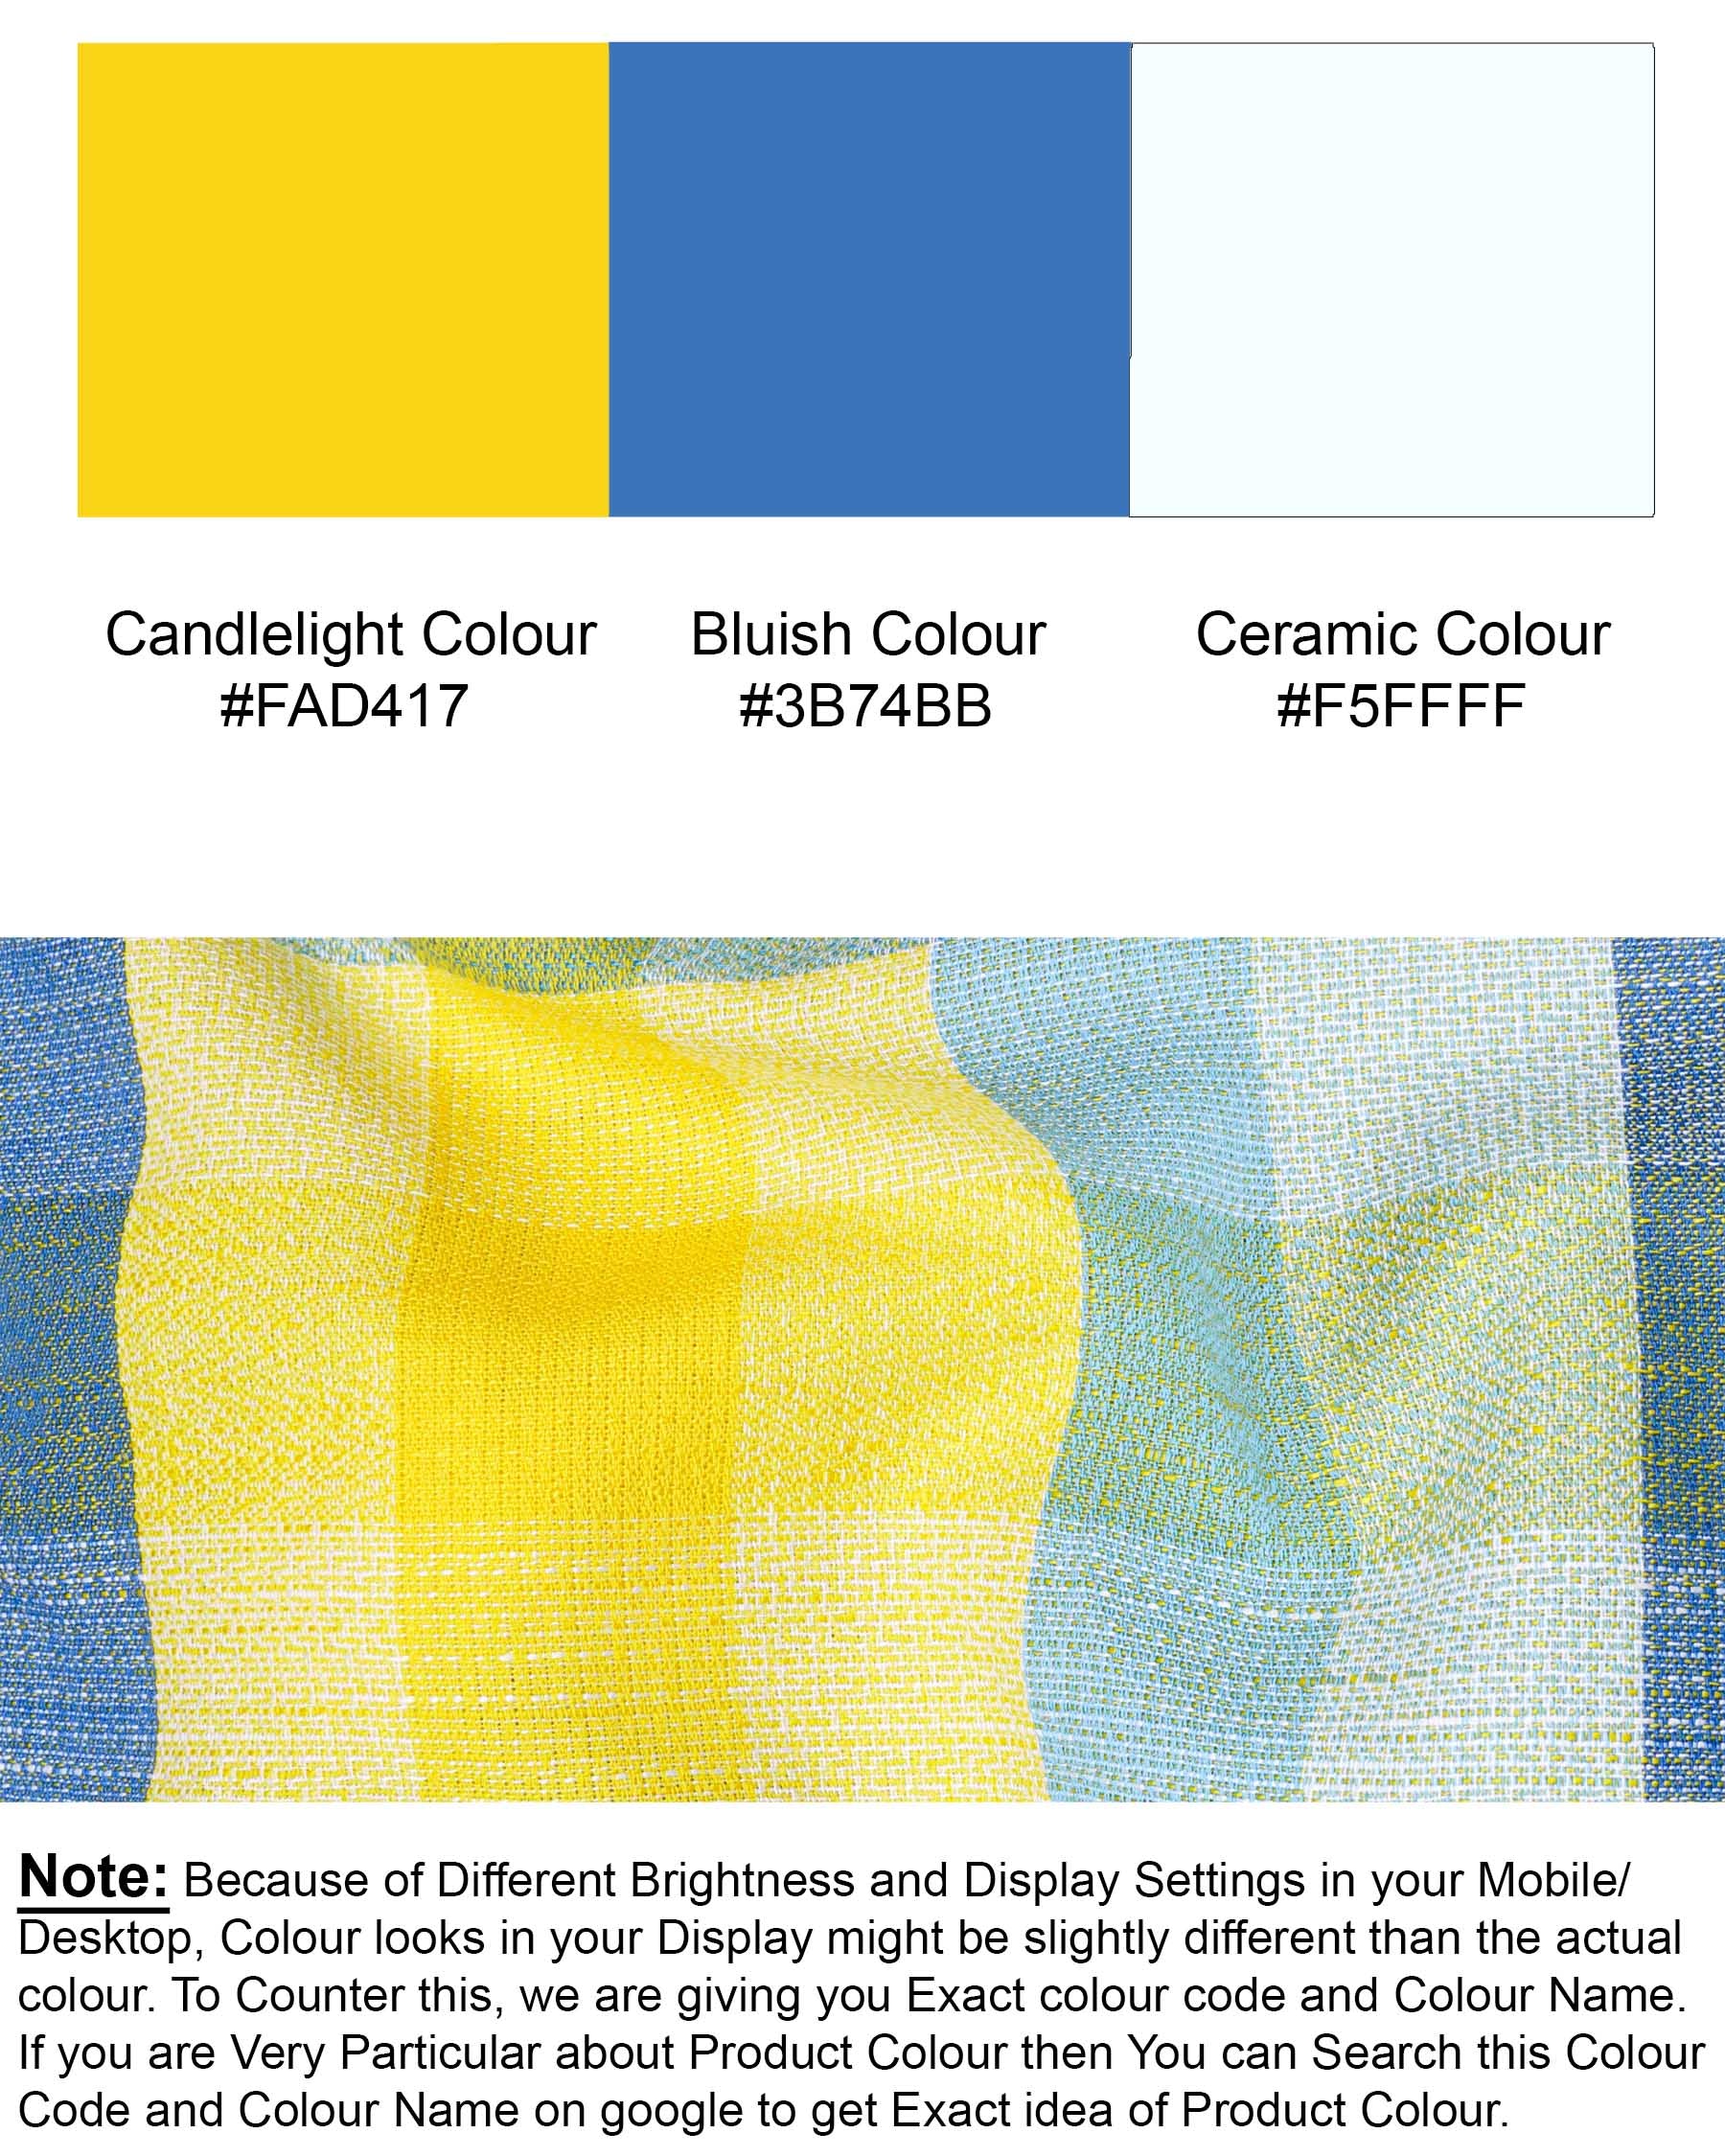 Candlelight Multicolour Checkered Dobby Premium Giza Cotton Shirt 6512-38, 6512-H-38, 6512-39, 6512-H-39, 6512-40, 6512-H-40, 6512-42, 6512-H-42, 6512-44, 6512-H-44, 6512-46, 6512-H-46, 6512-48, 6512-H-48, 6512-50, 6512-H-50, 6512-52, 6512-H-52